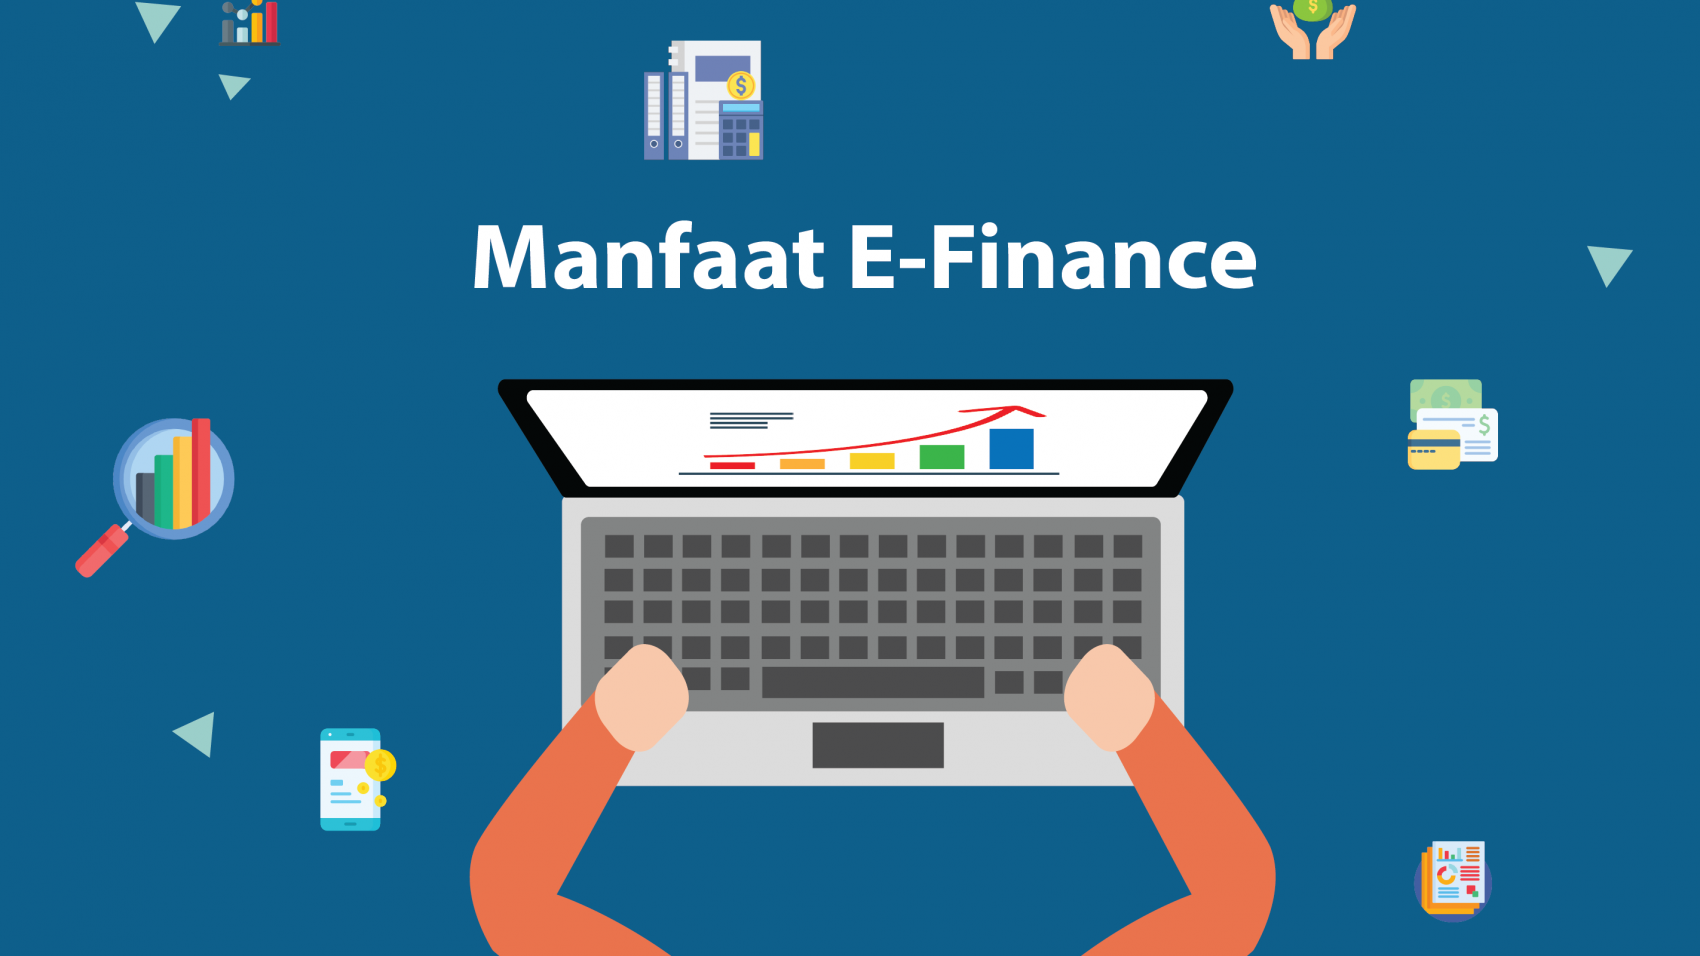 Manfaat E-Finance